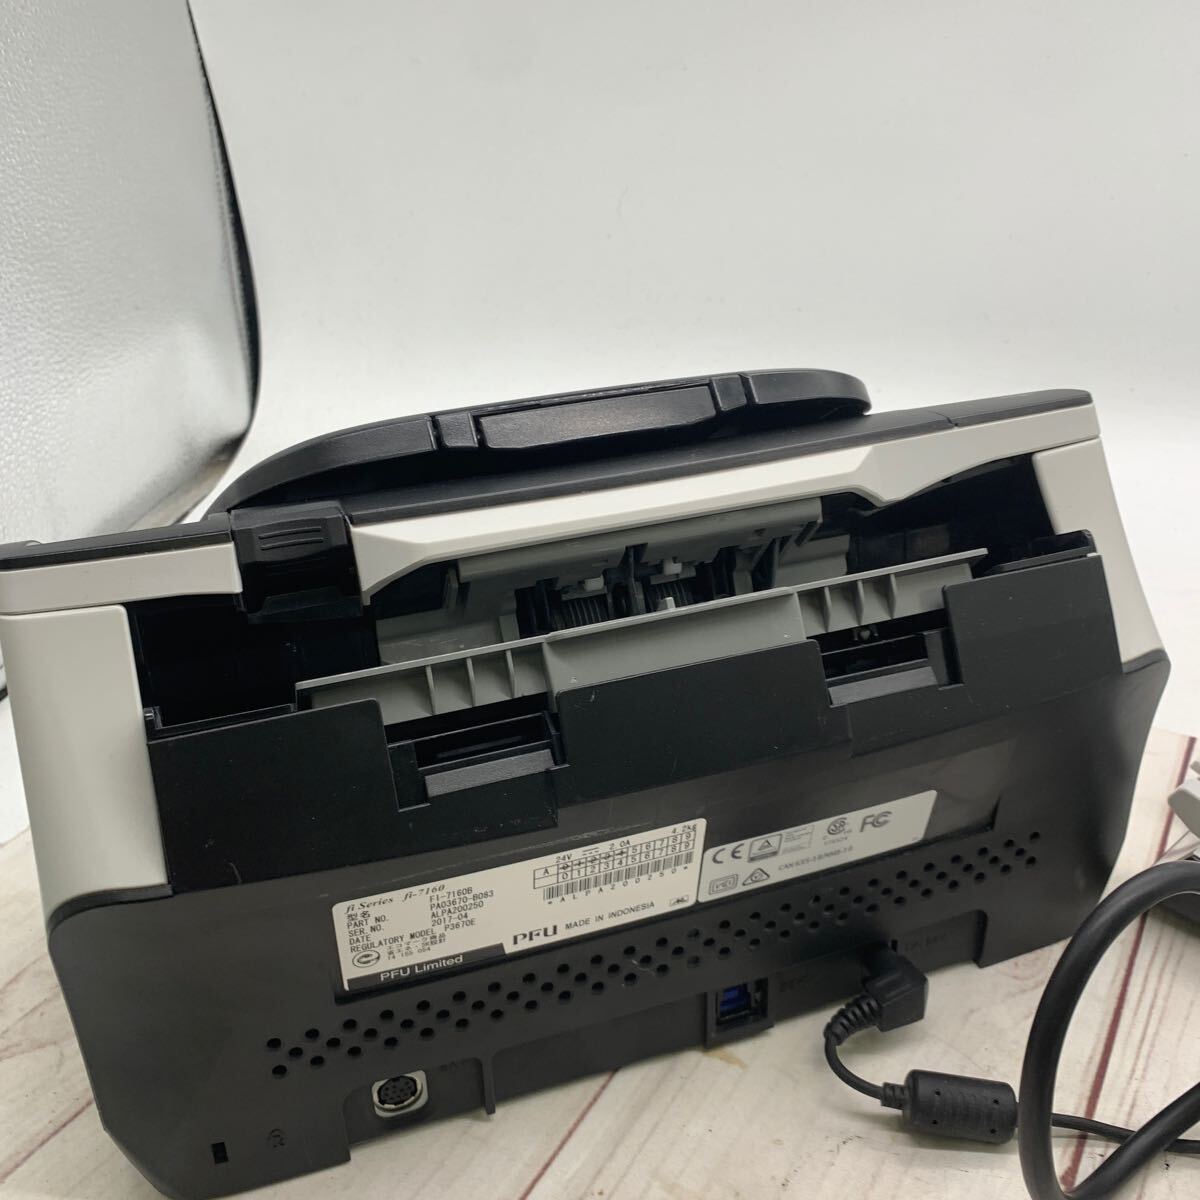 *B999* roller exchange necessary total scan 196222 sheets FUJITSU image Scanner FI-7160B Fujitsu used 2018 year made scanner 